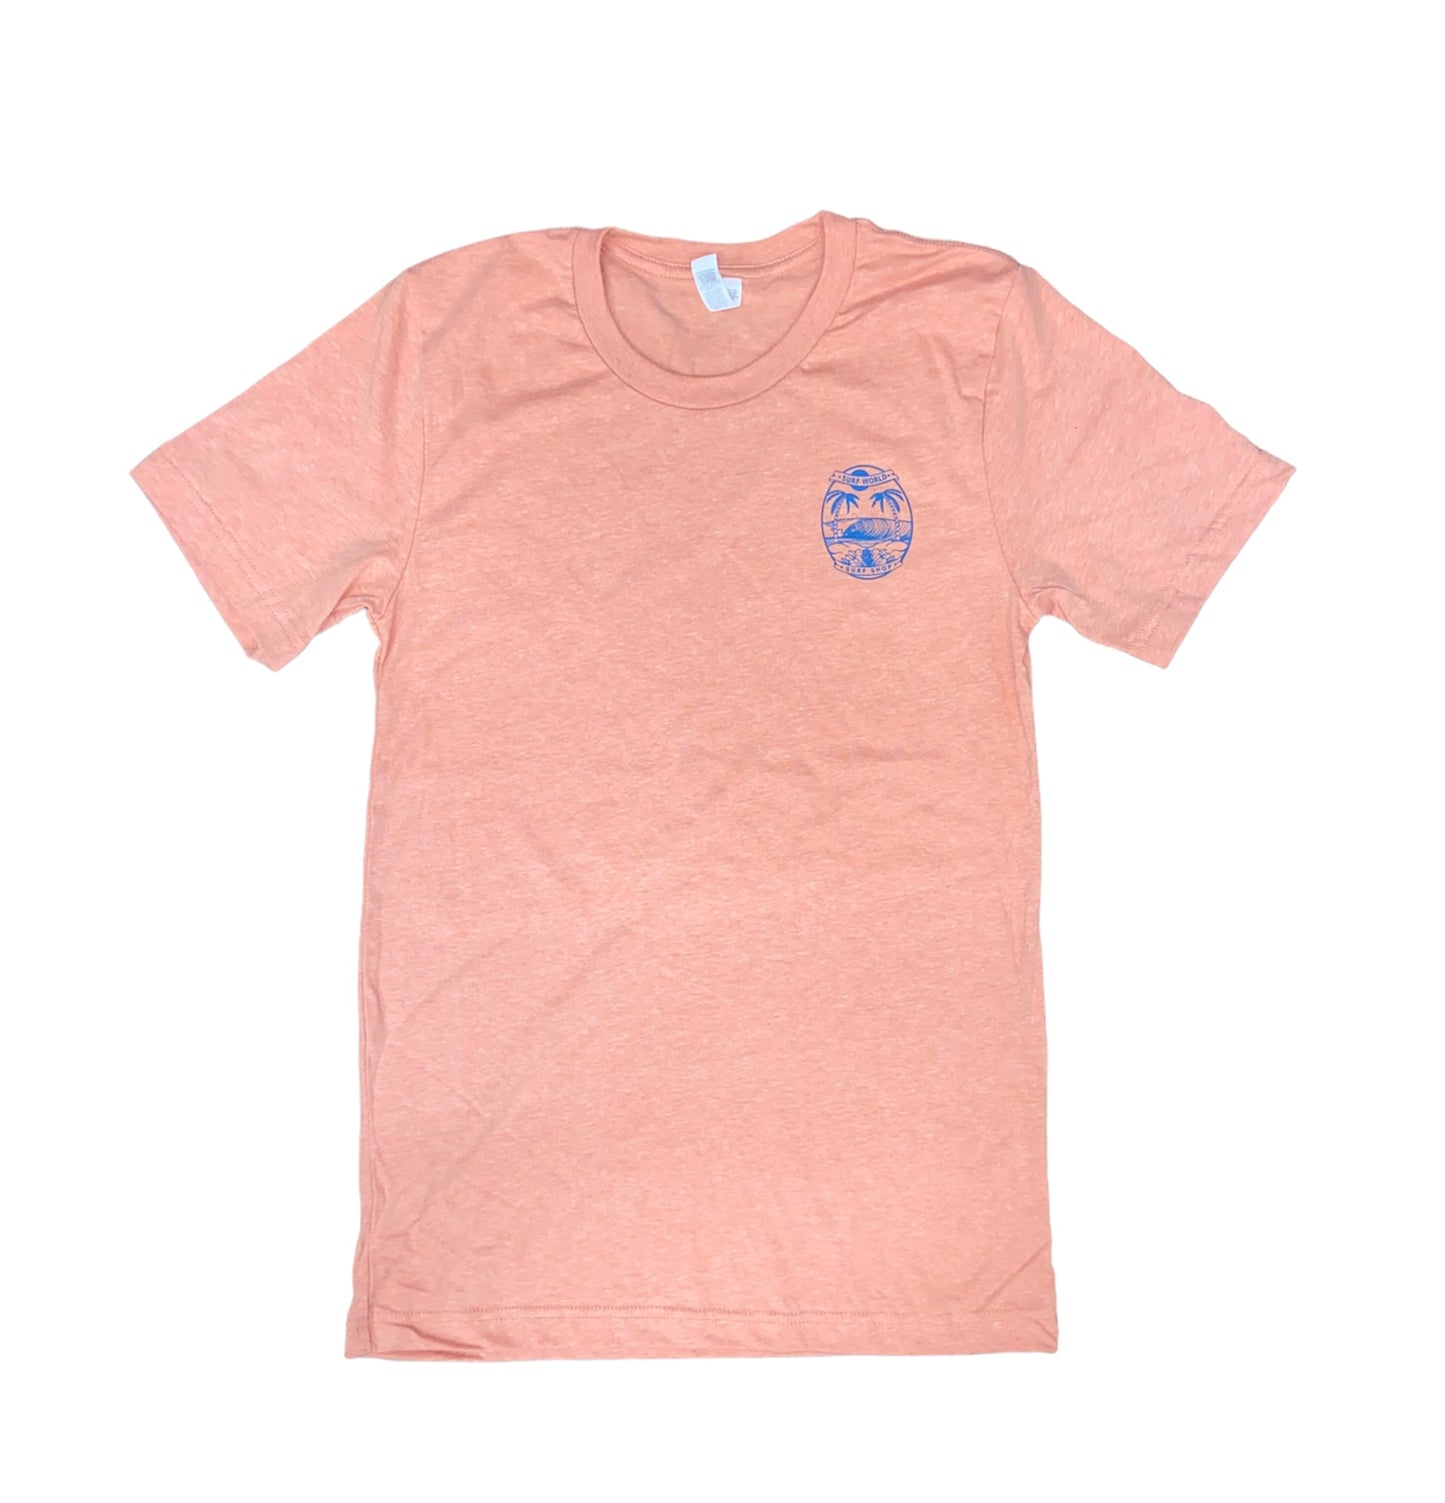 Surfworld Double Palms Left Premium Tee Shirt - Heather Peach Mens T Shirt